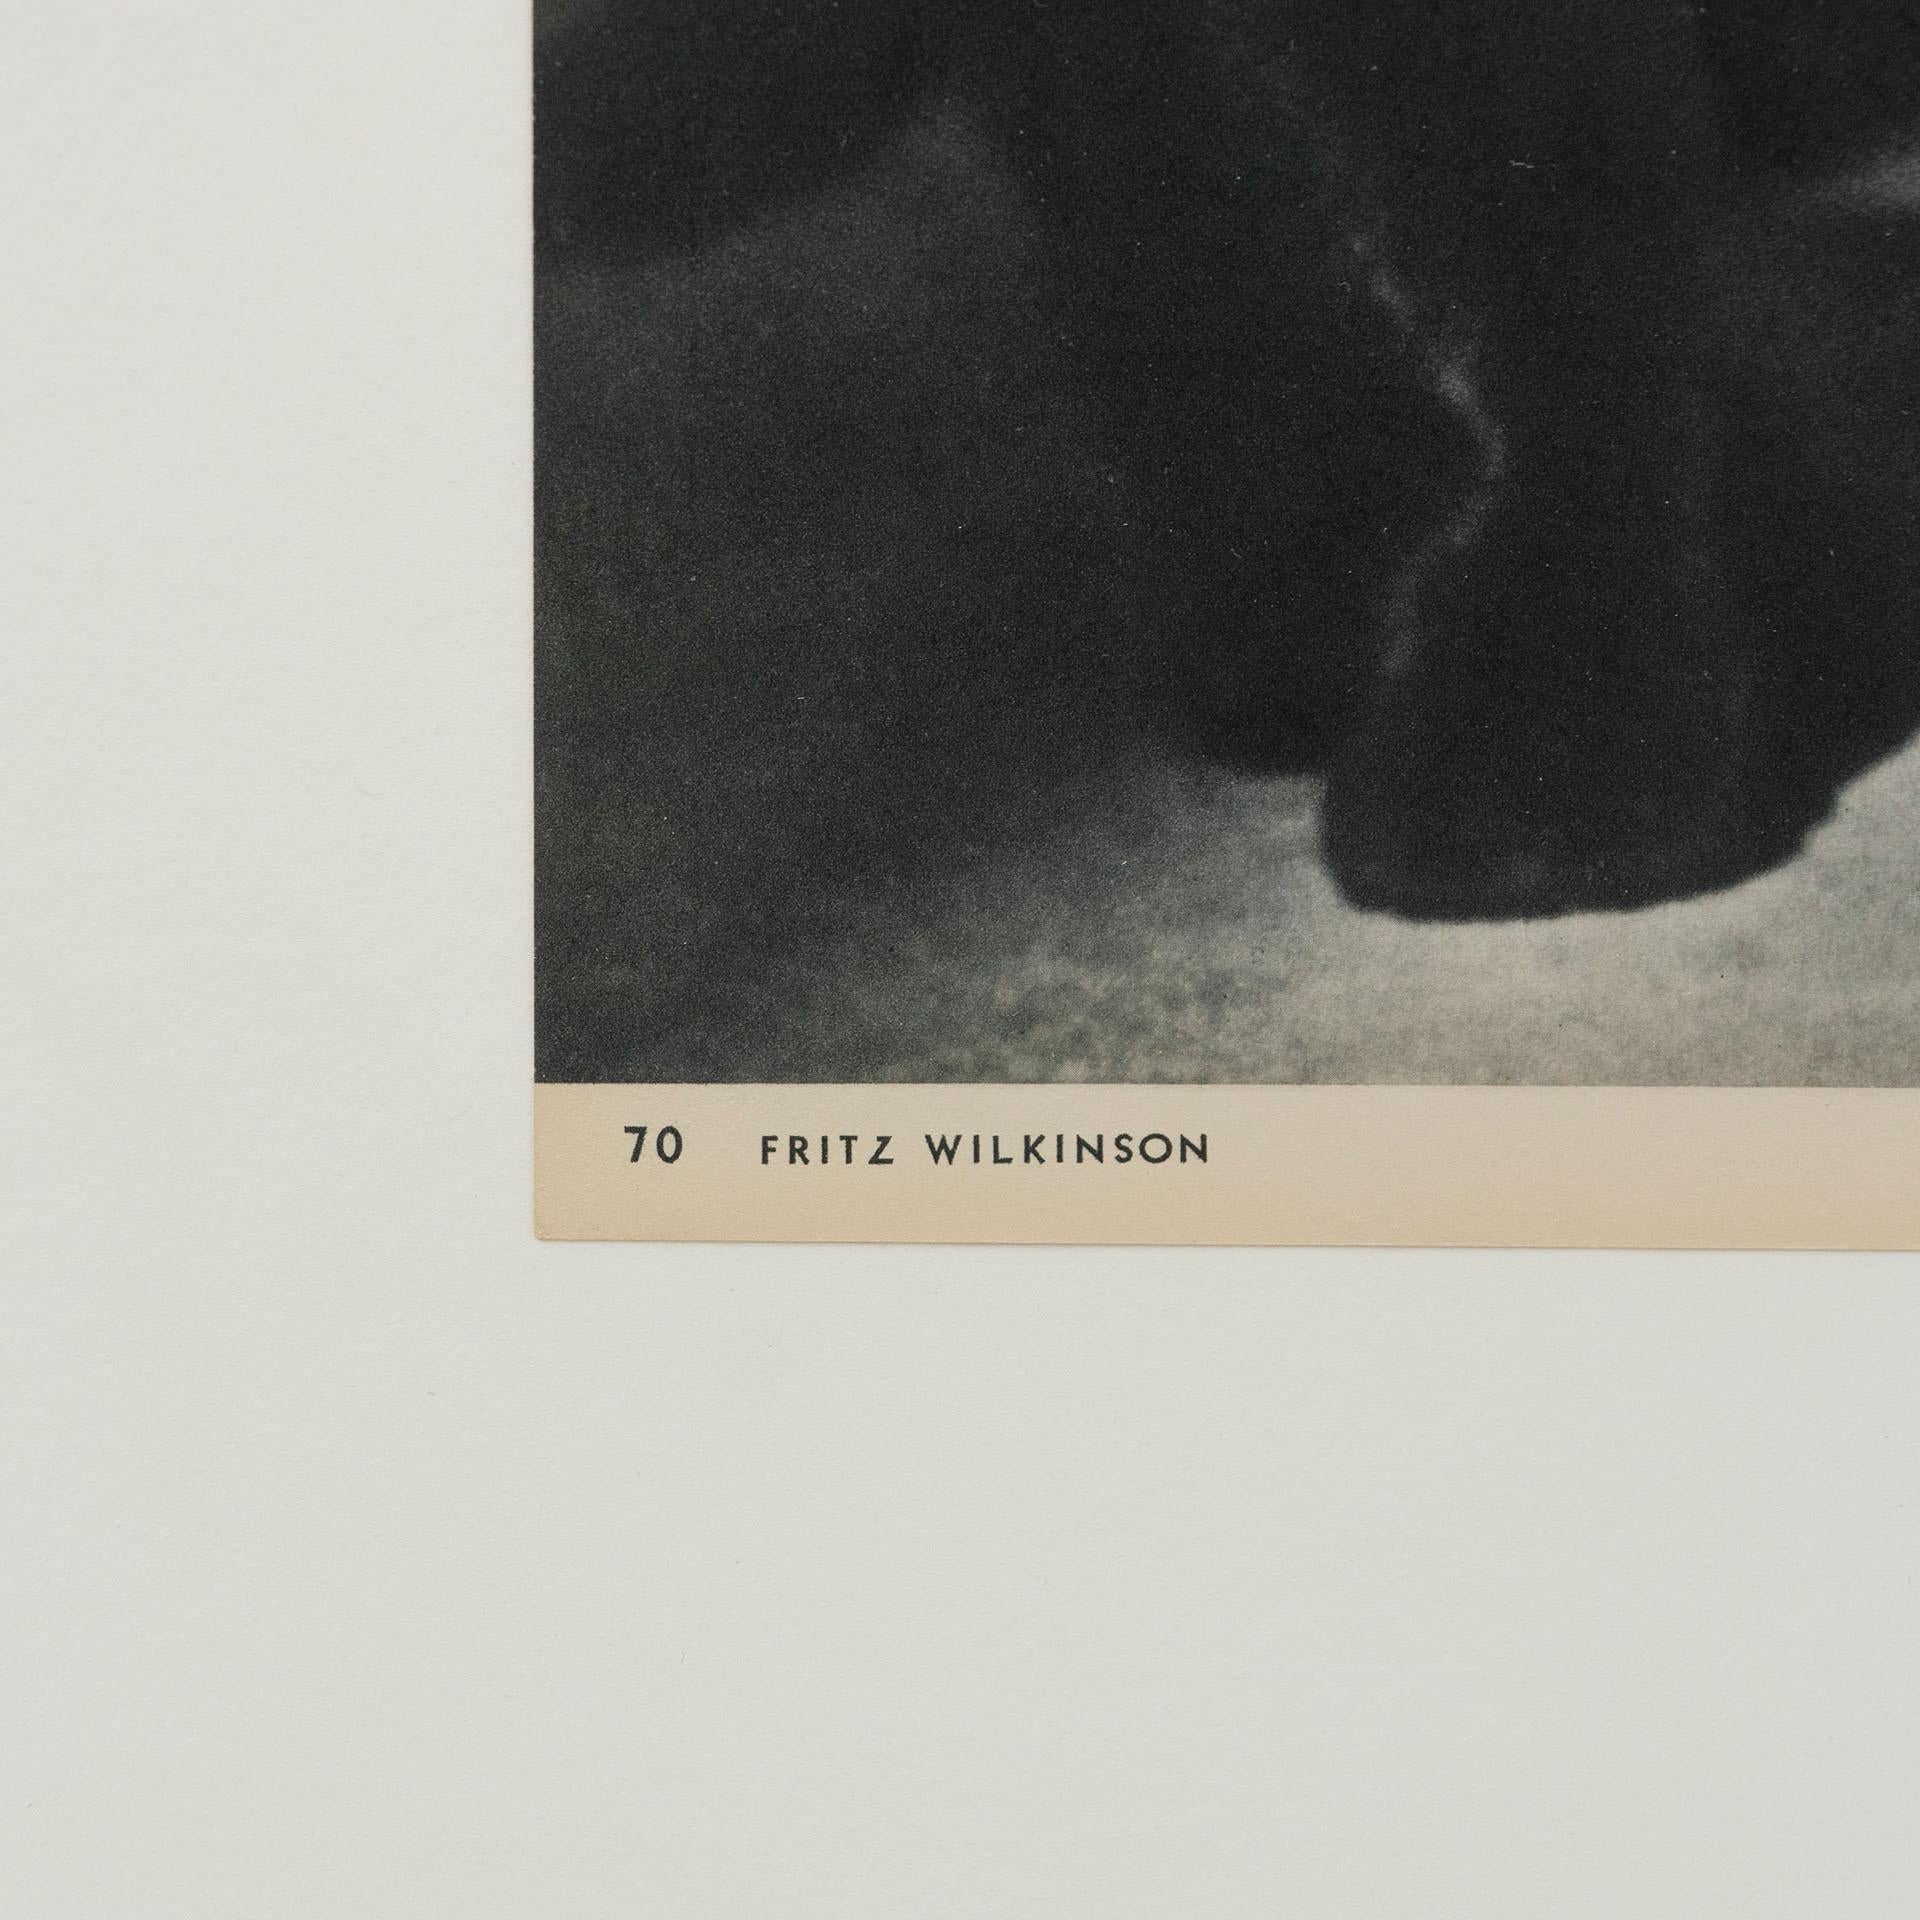 Fritz Wilkinson Vintage Photo Gravure, circa 1940 For Sale 1